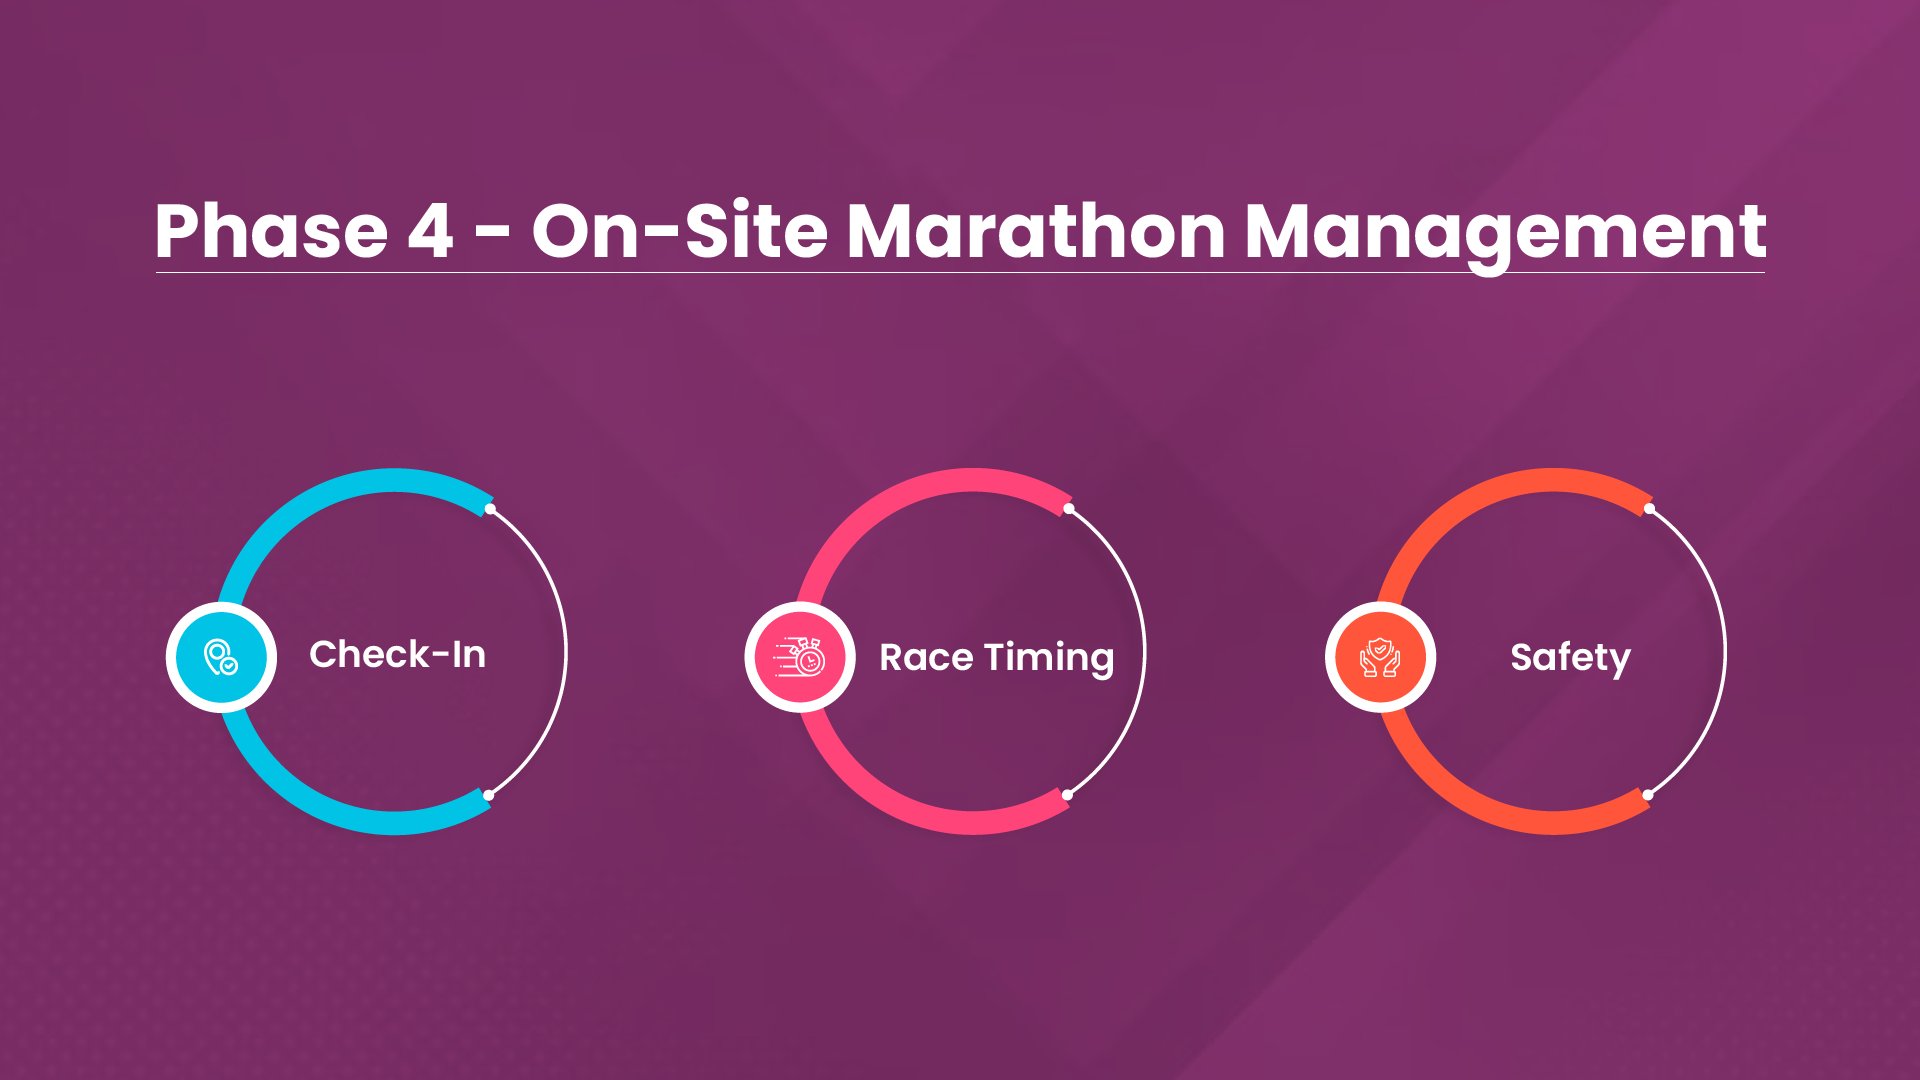 Phase 4: On-Site Marathon Management